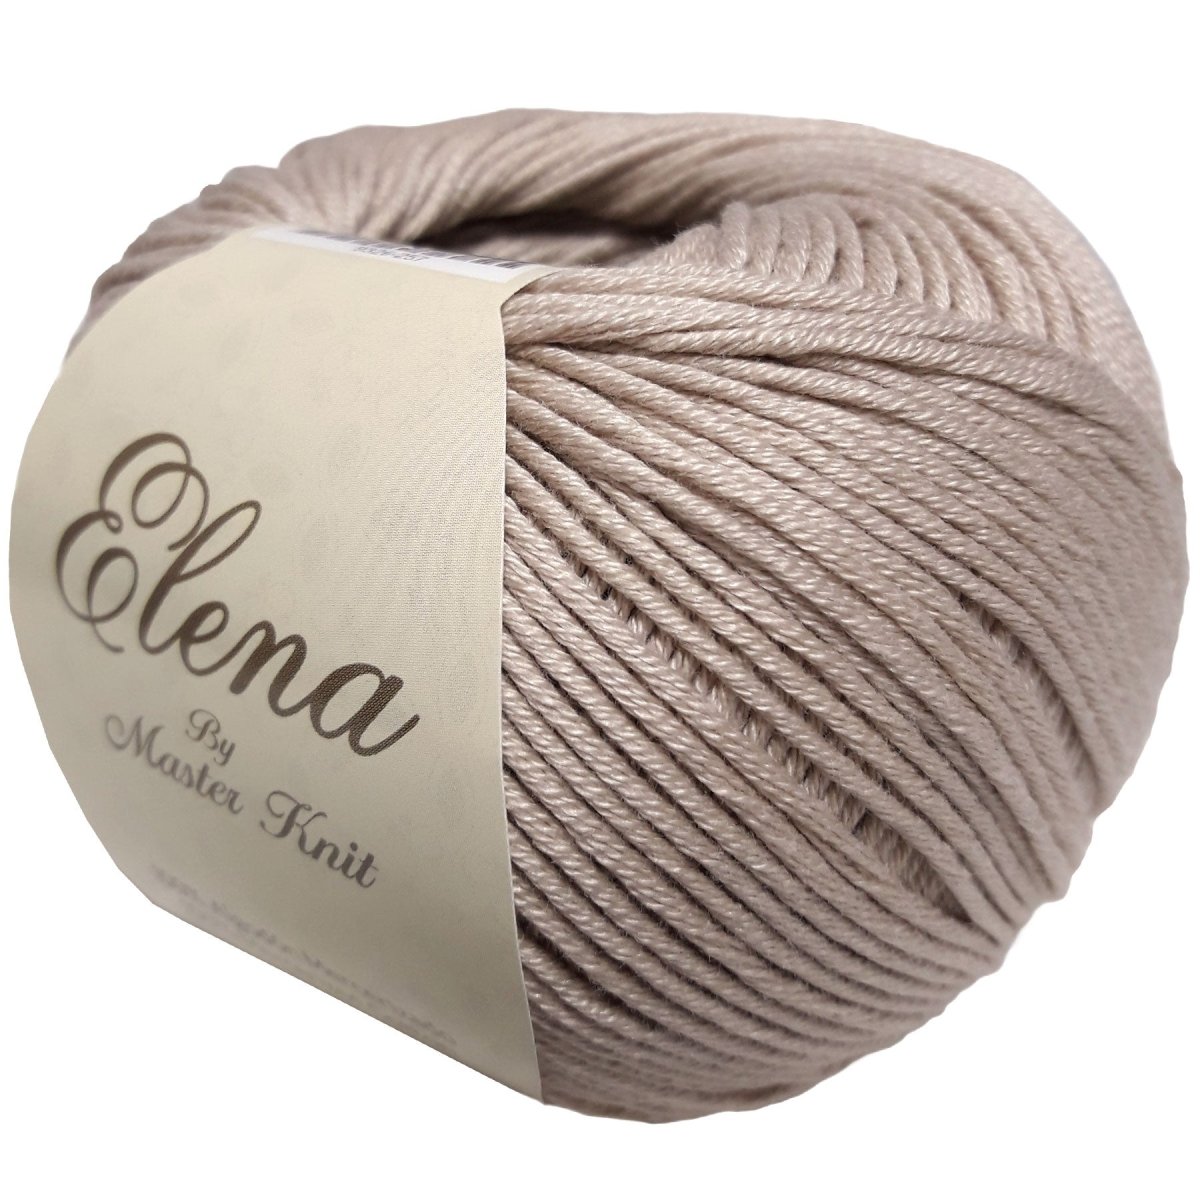 ELENA - Crochetstores9326-257745051438852